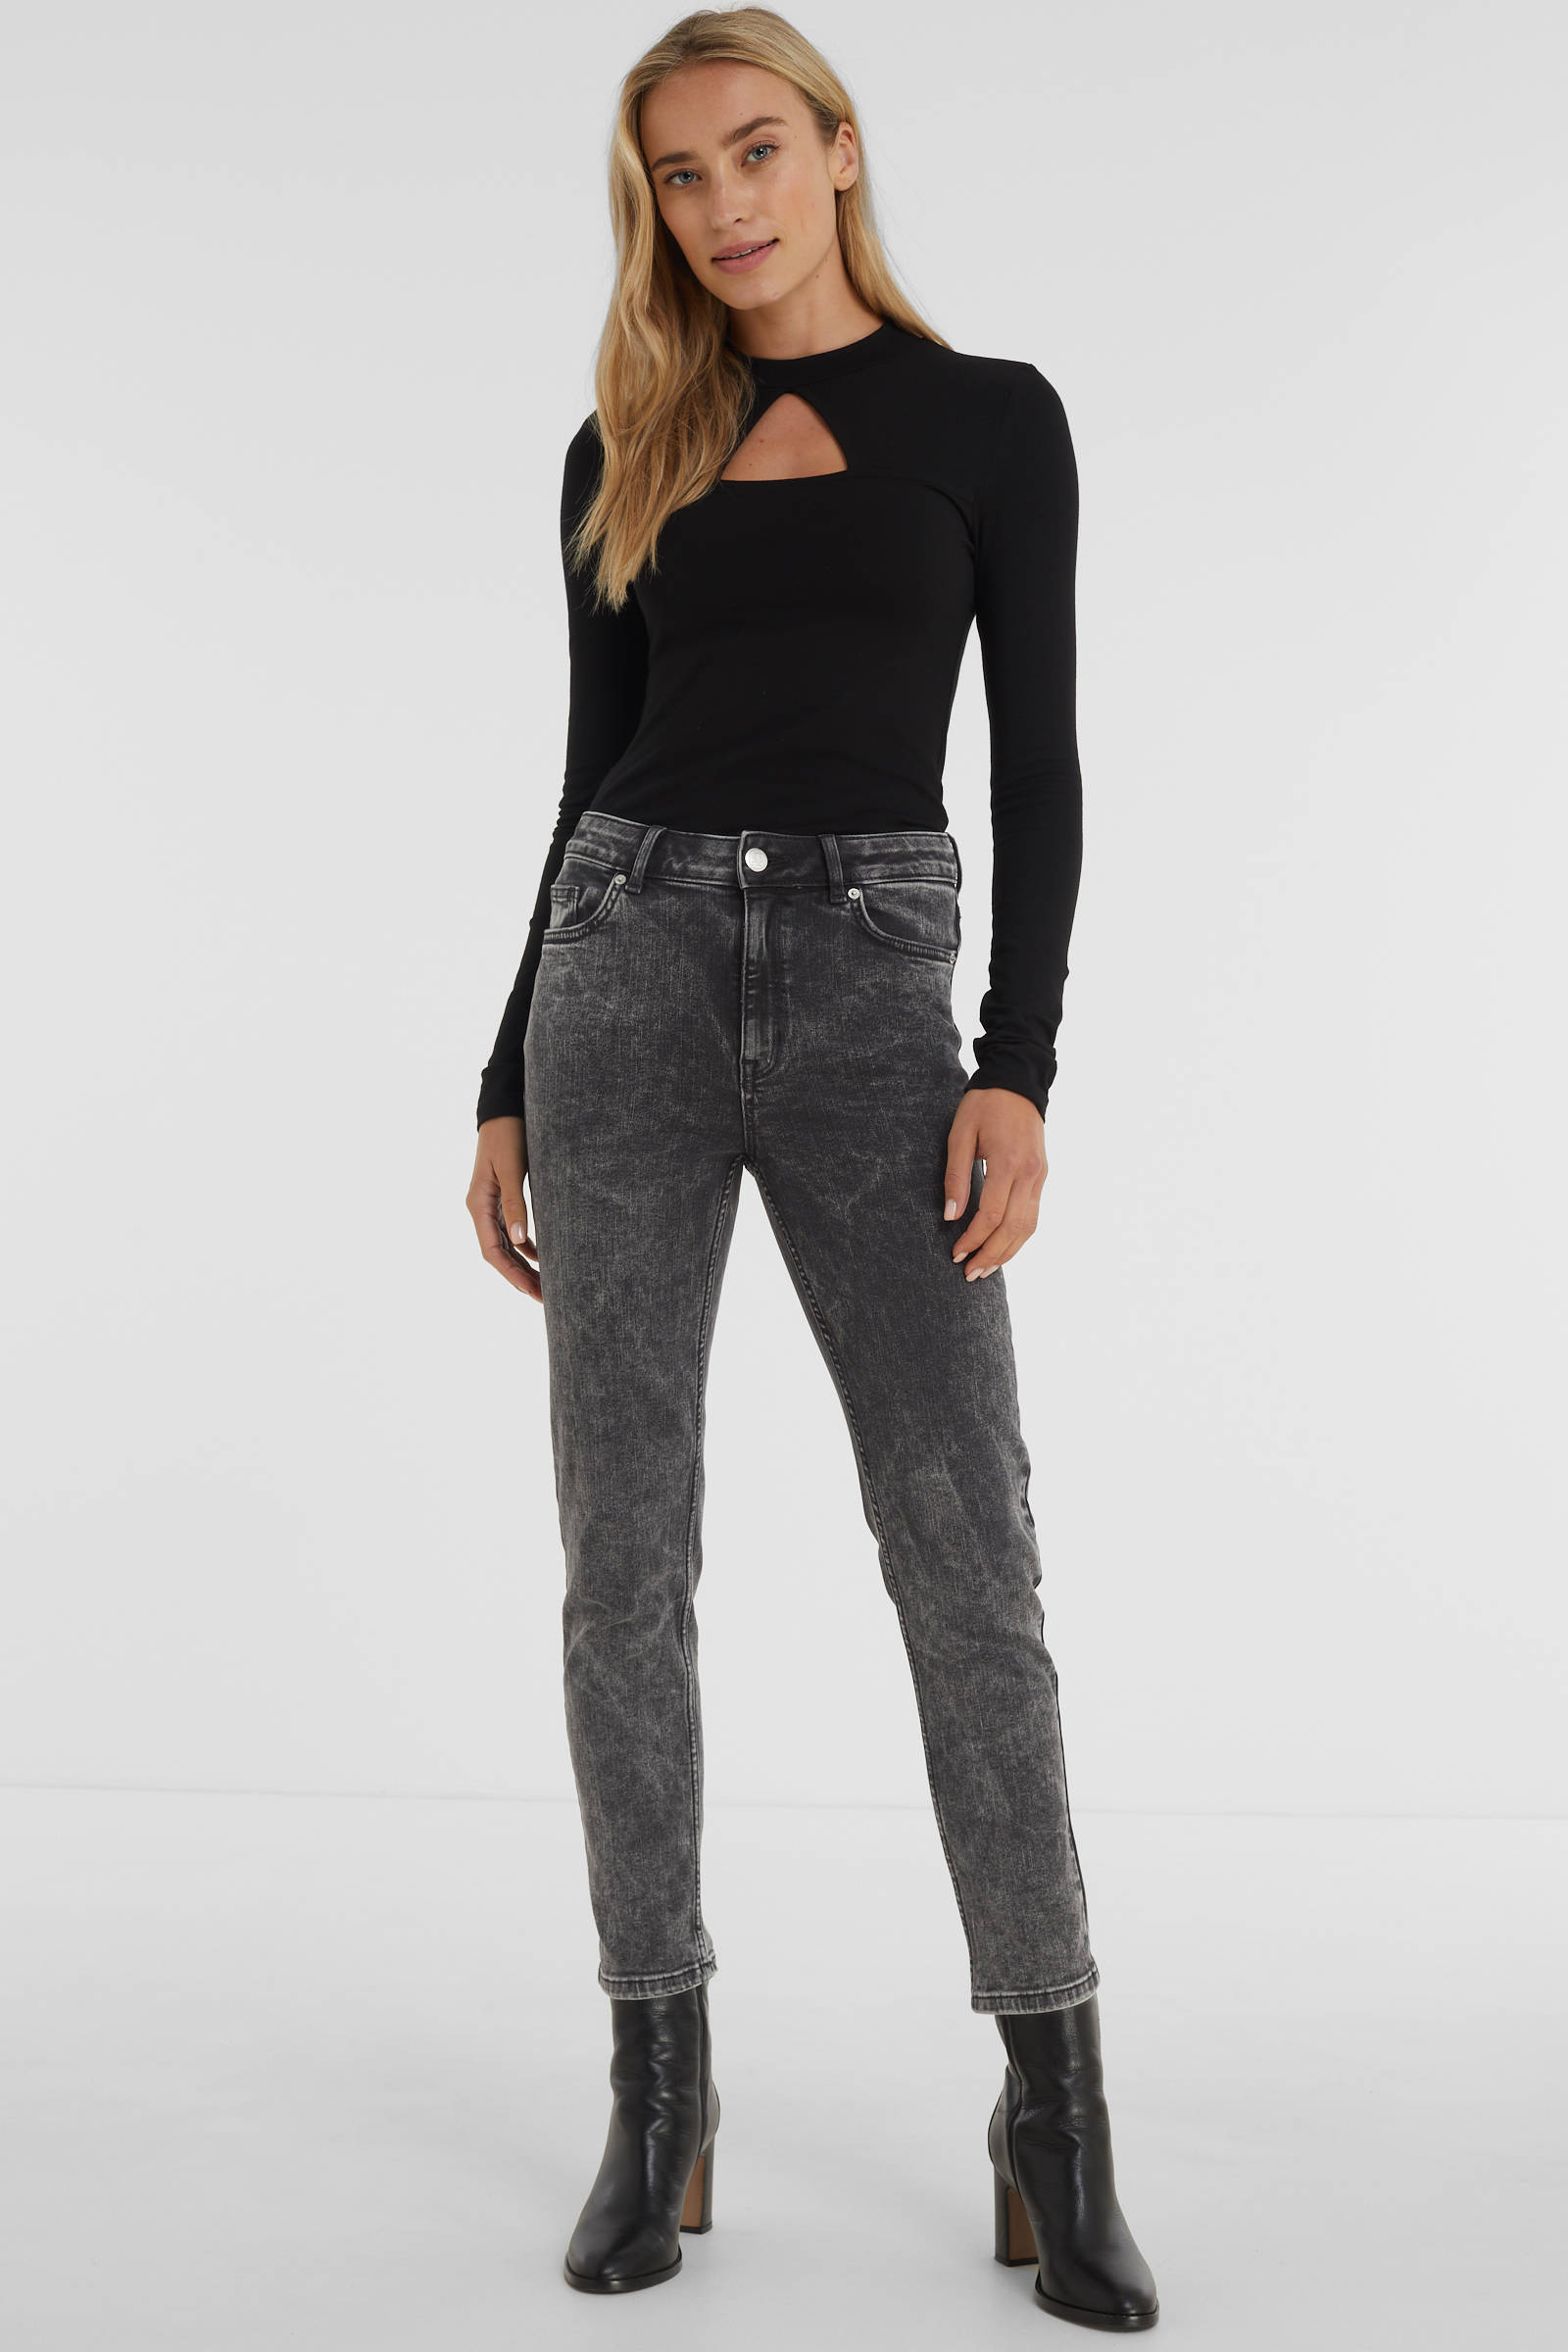 wehkamp Dames Kleding Broeken & Jeans Jeans High Waisted Jeans High waist skinny broek VIJEGGY zwart 